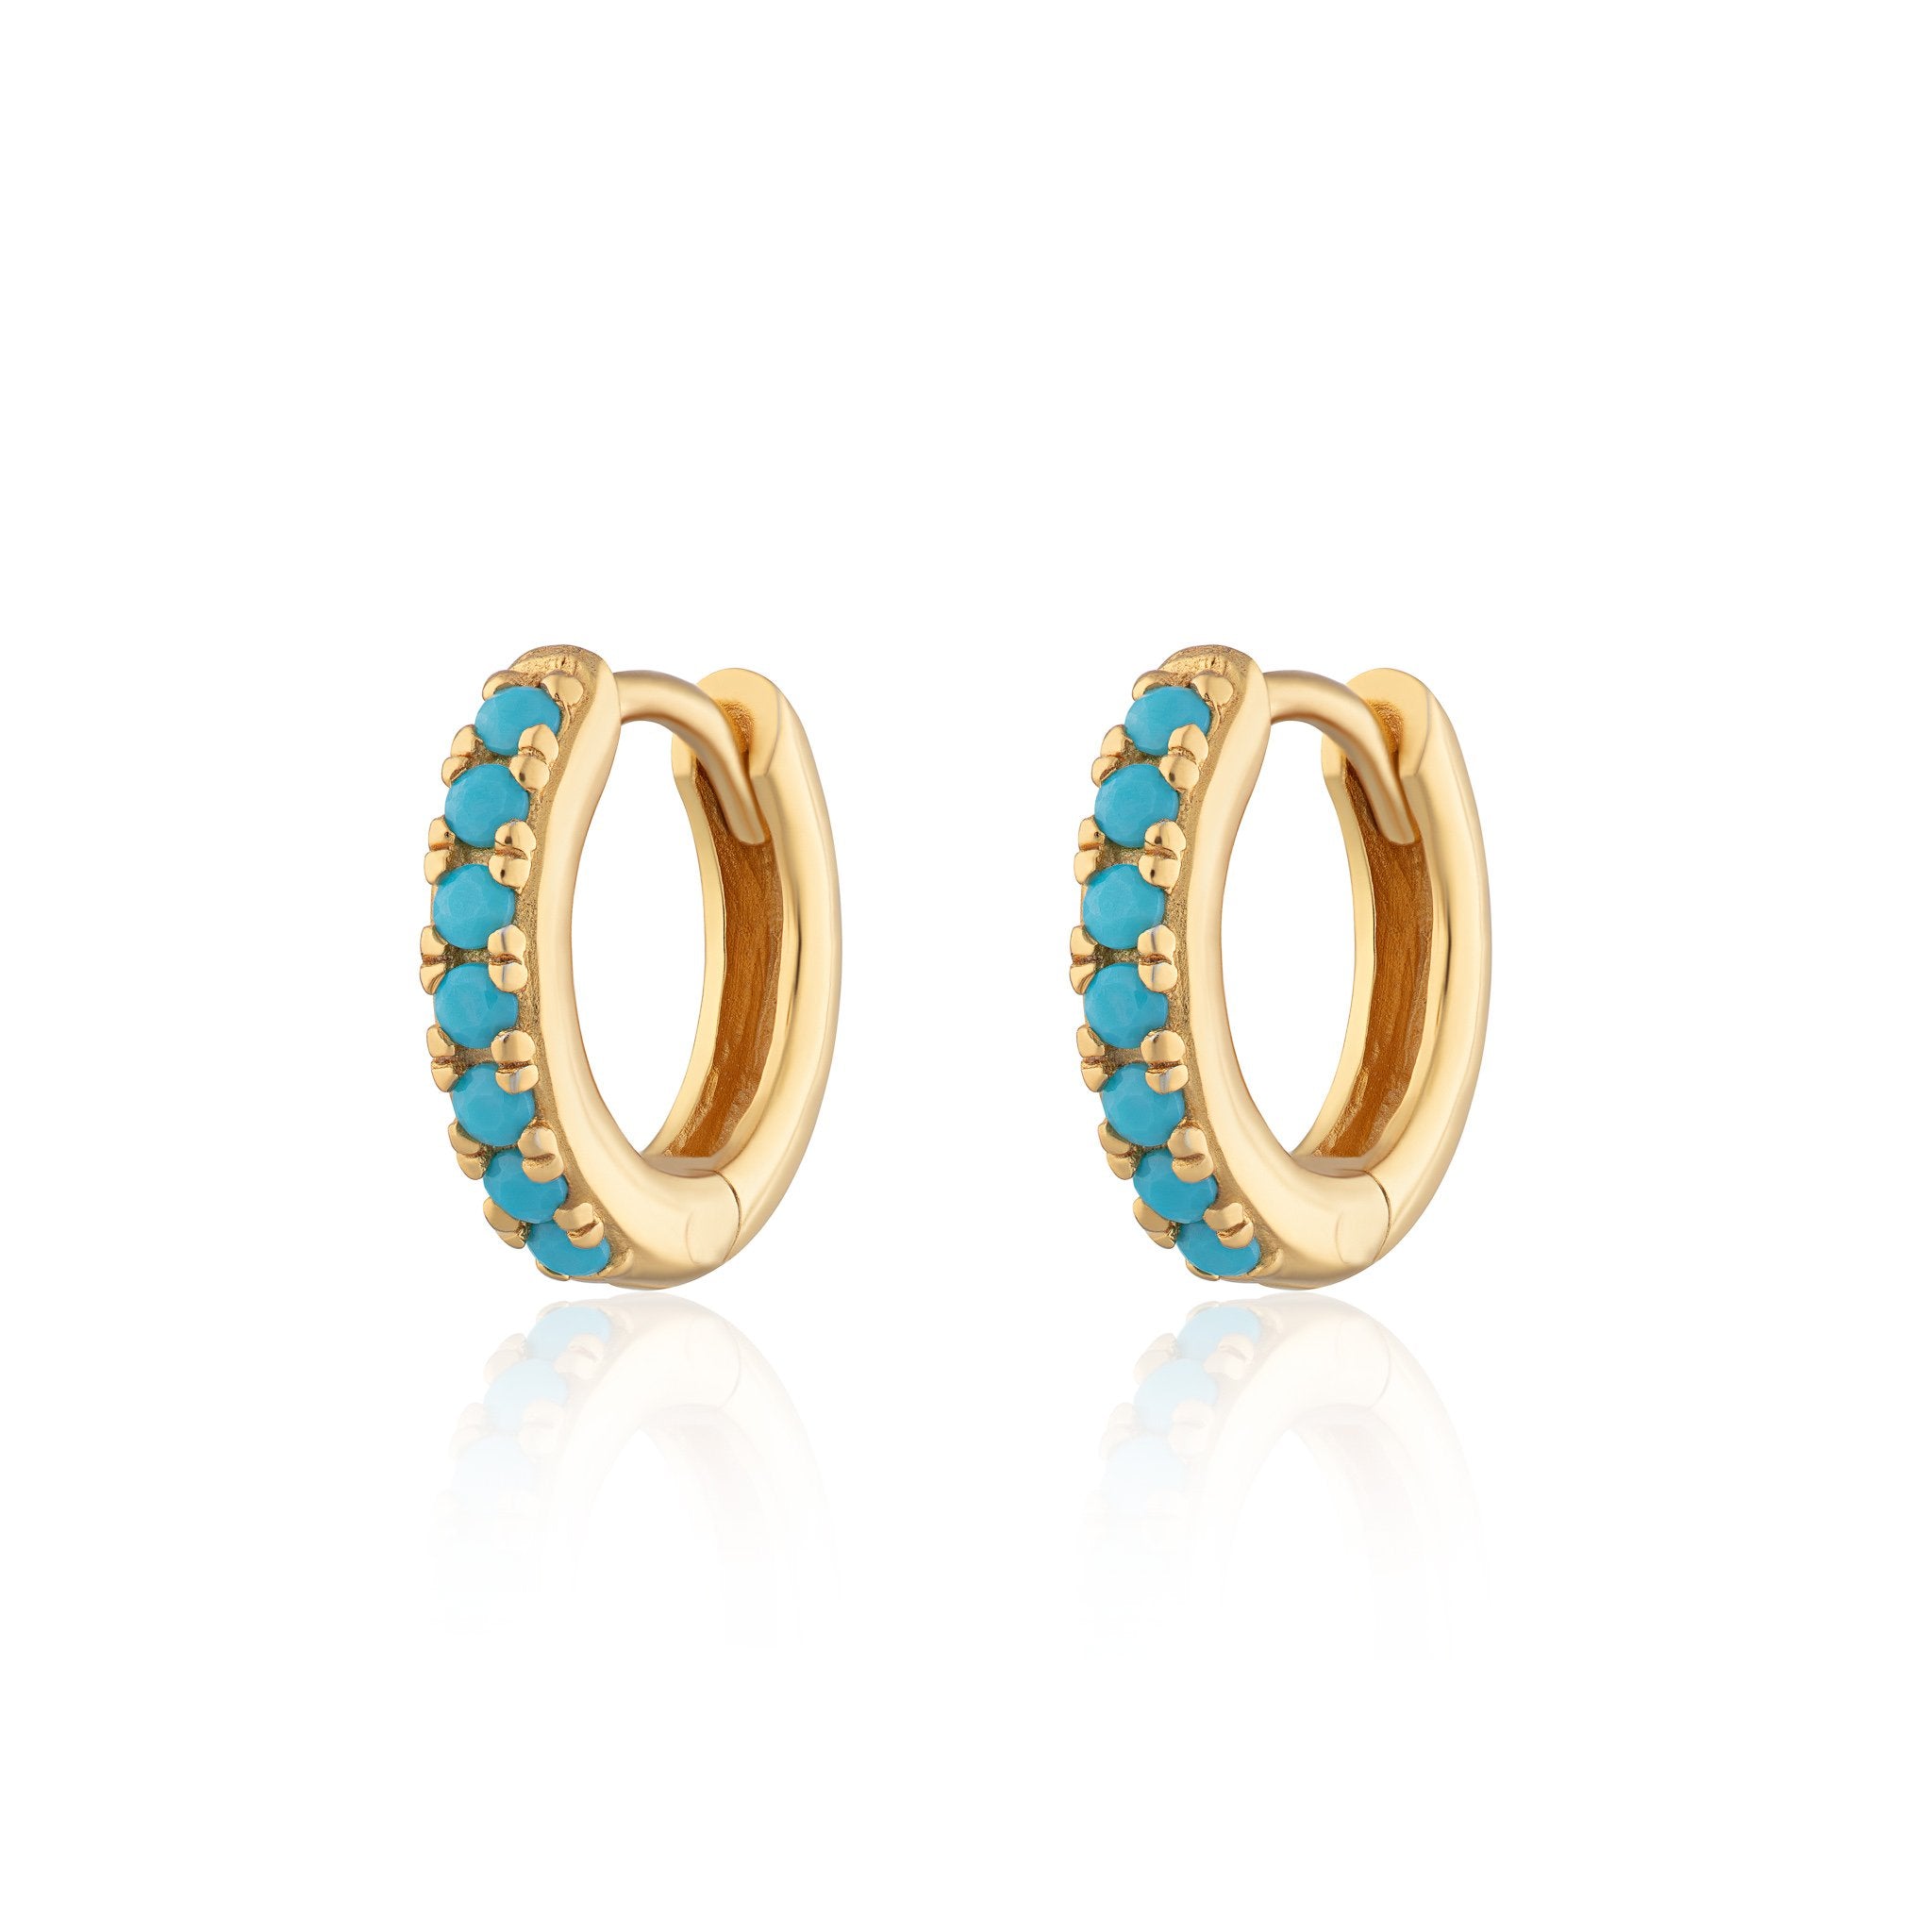 Huggie Earrings With Turquoise Stones